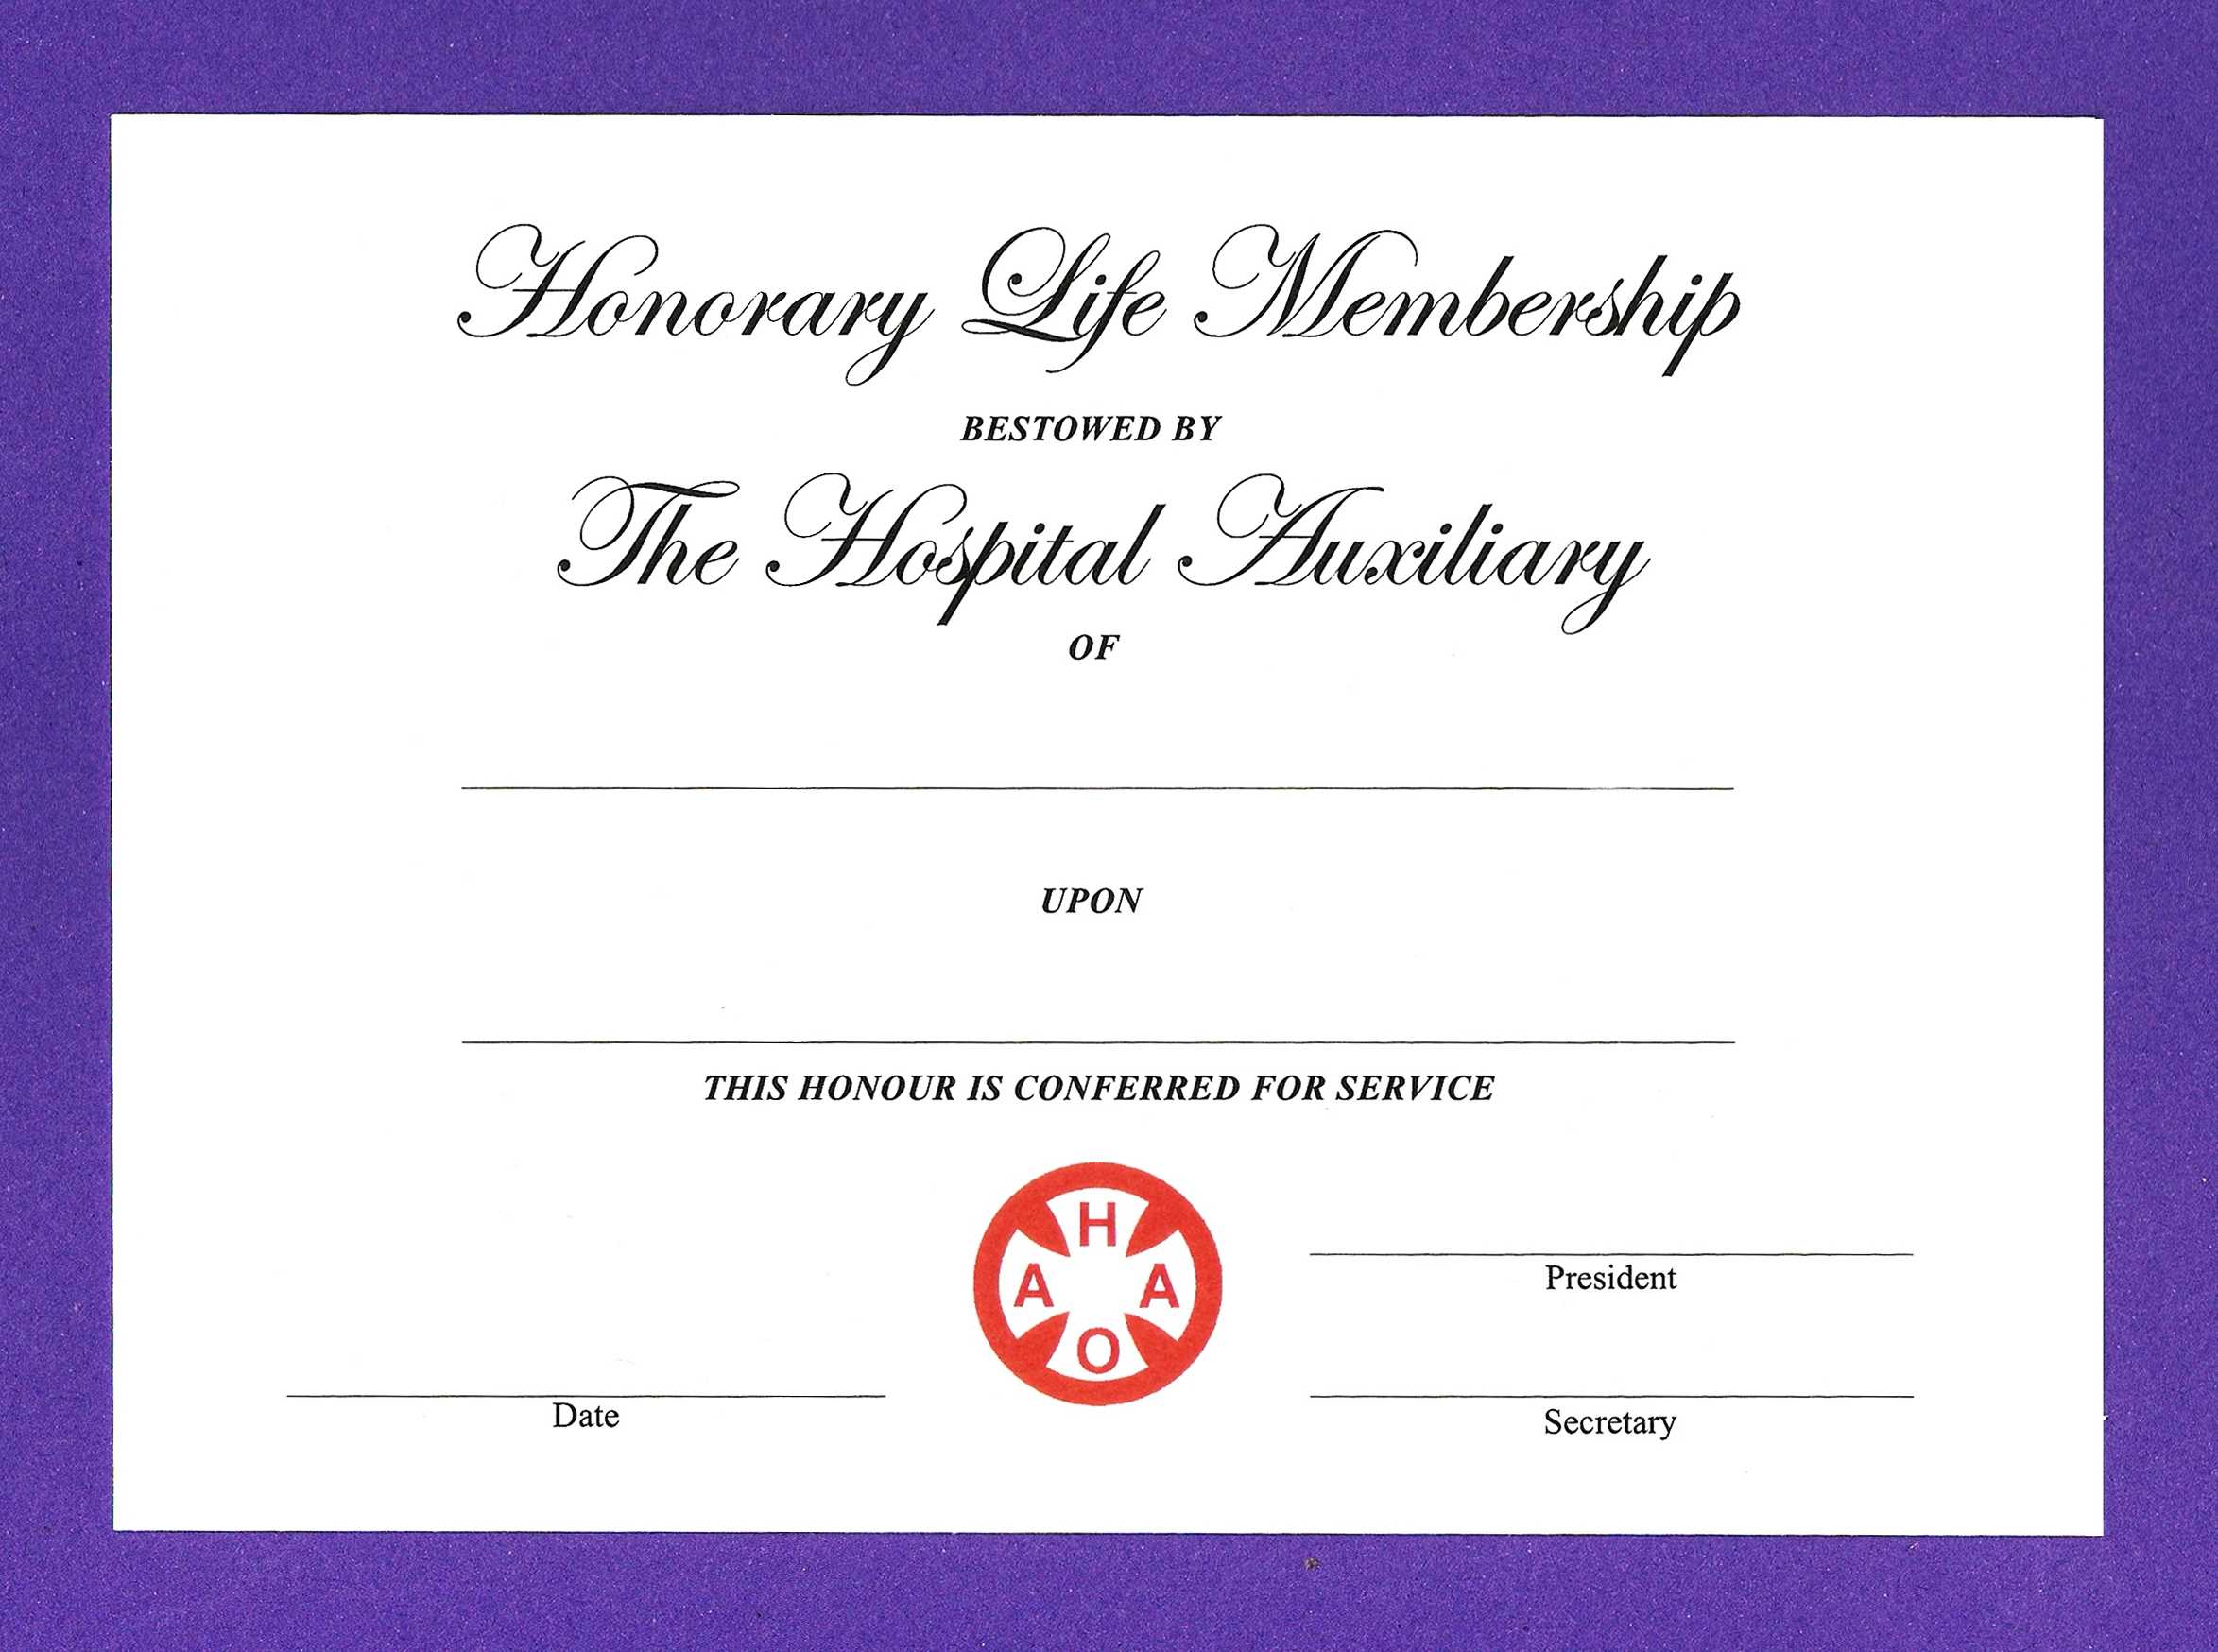 Honorary Membership Certificate Template - Calep.midnightpig.co With Regard To Life Membership Certificate Templates